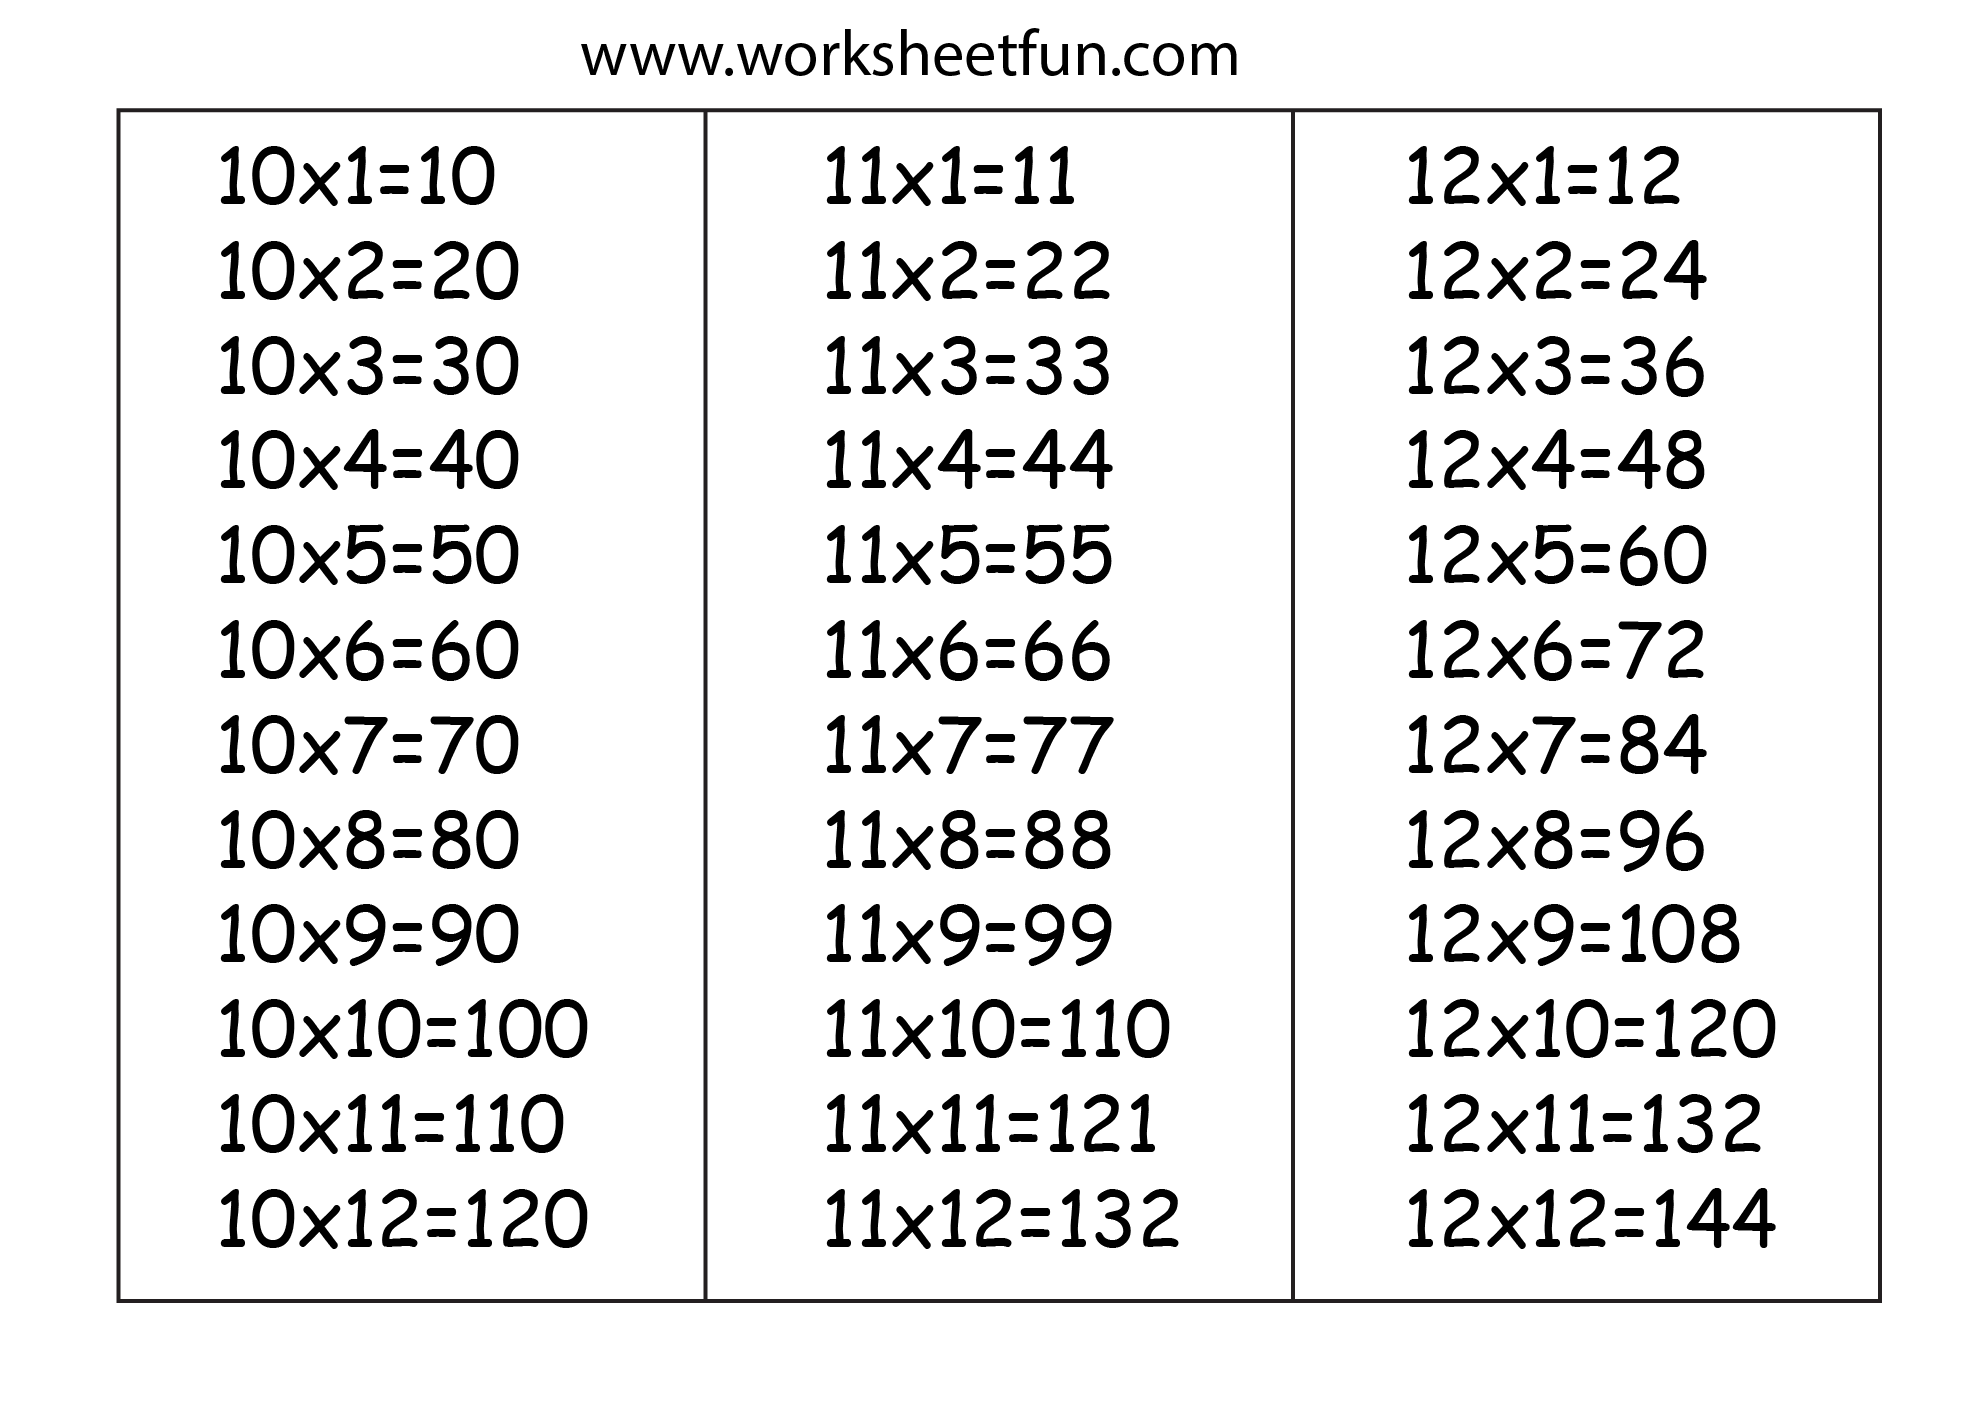 times-table-chart-10-11-12-free-printable-worksheets-worksheetfun